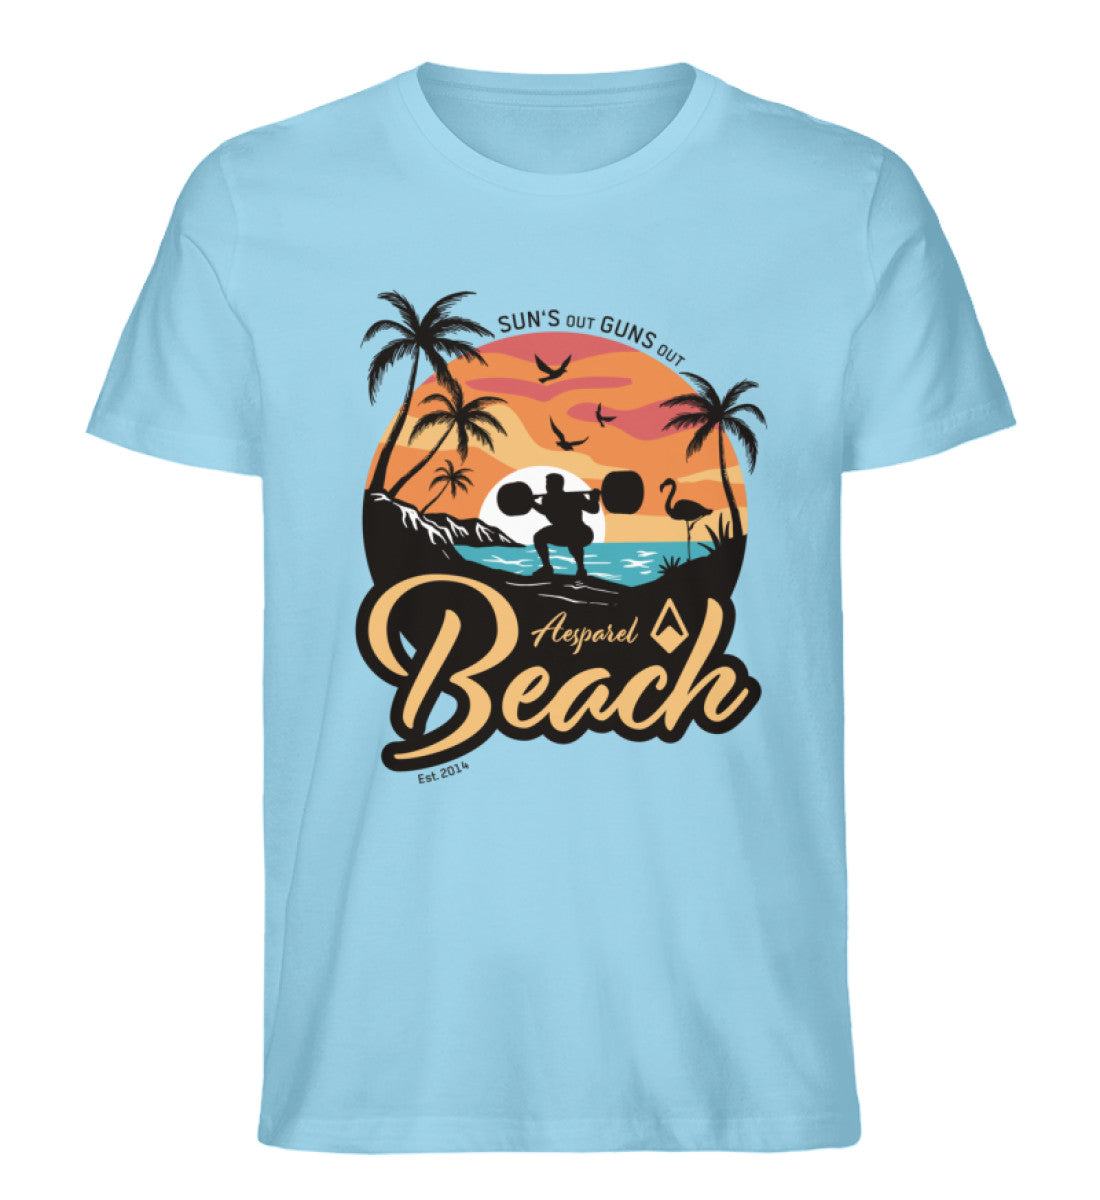 Himmelblaus Battle Beach Tshirt 